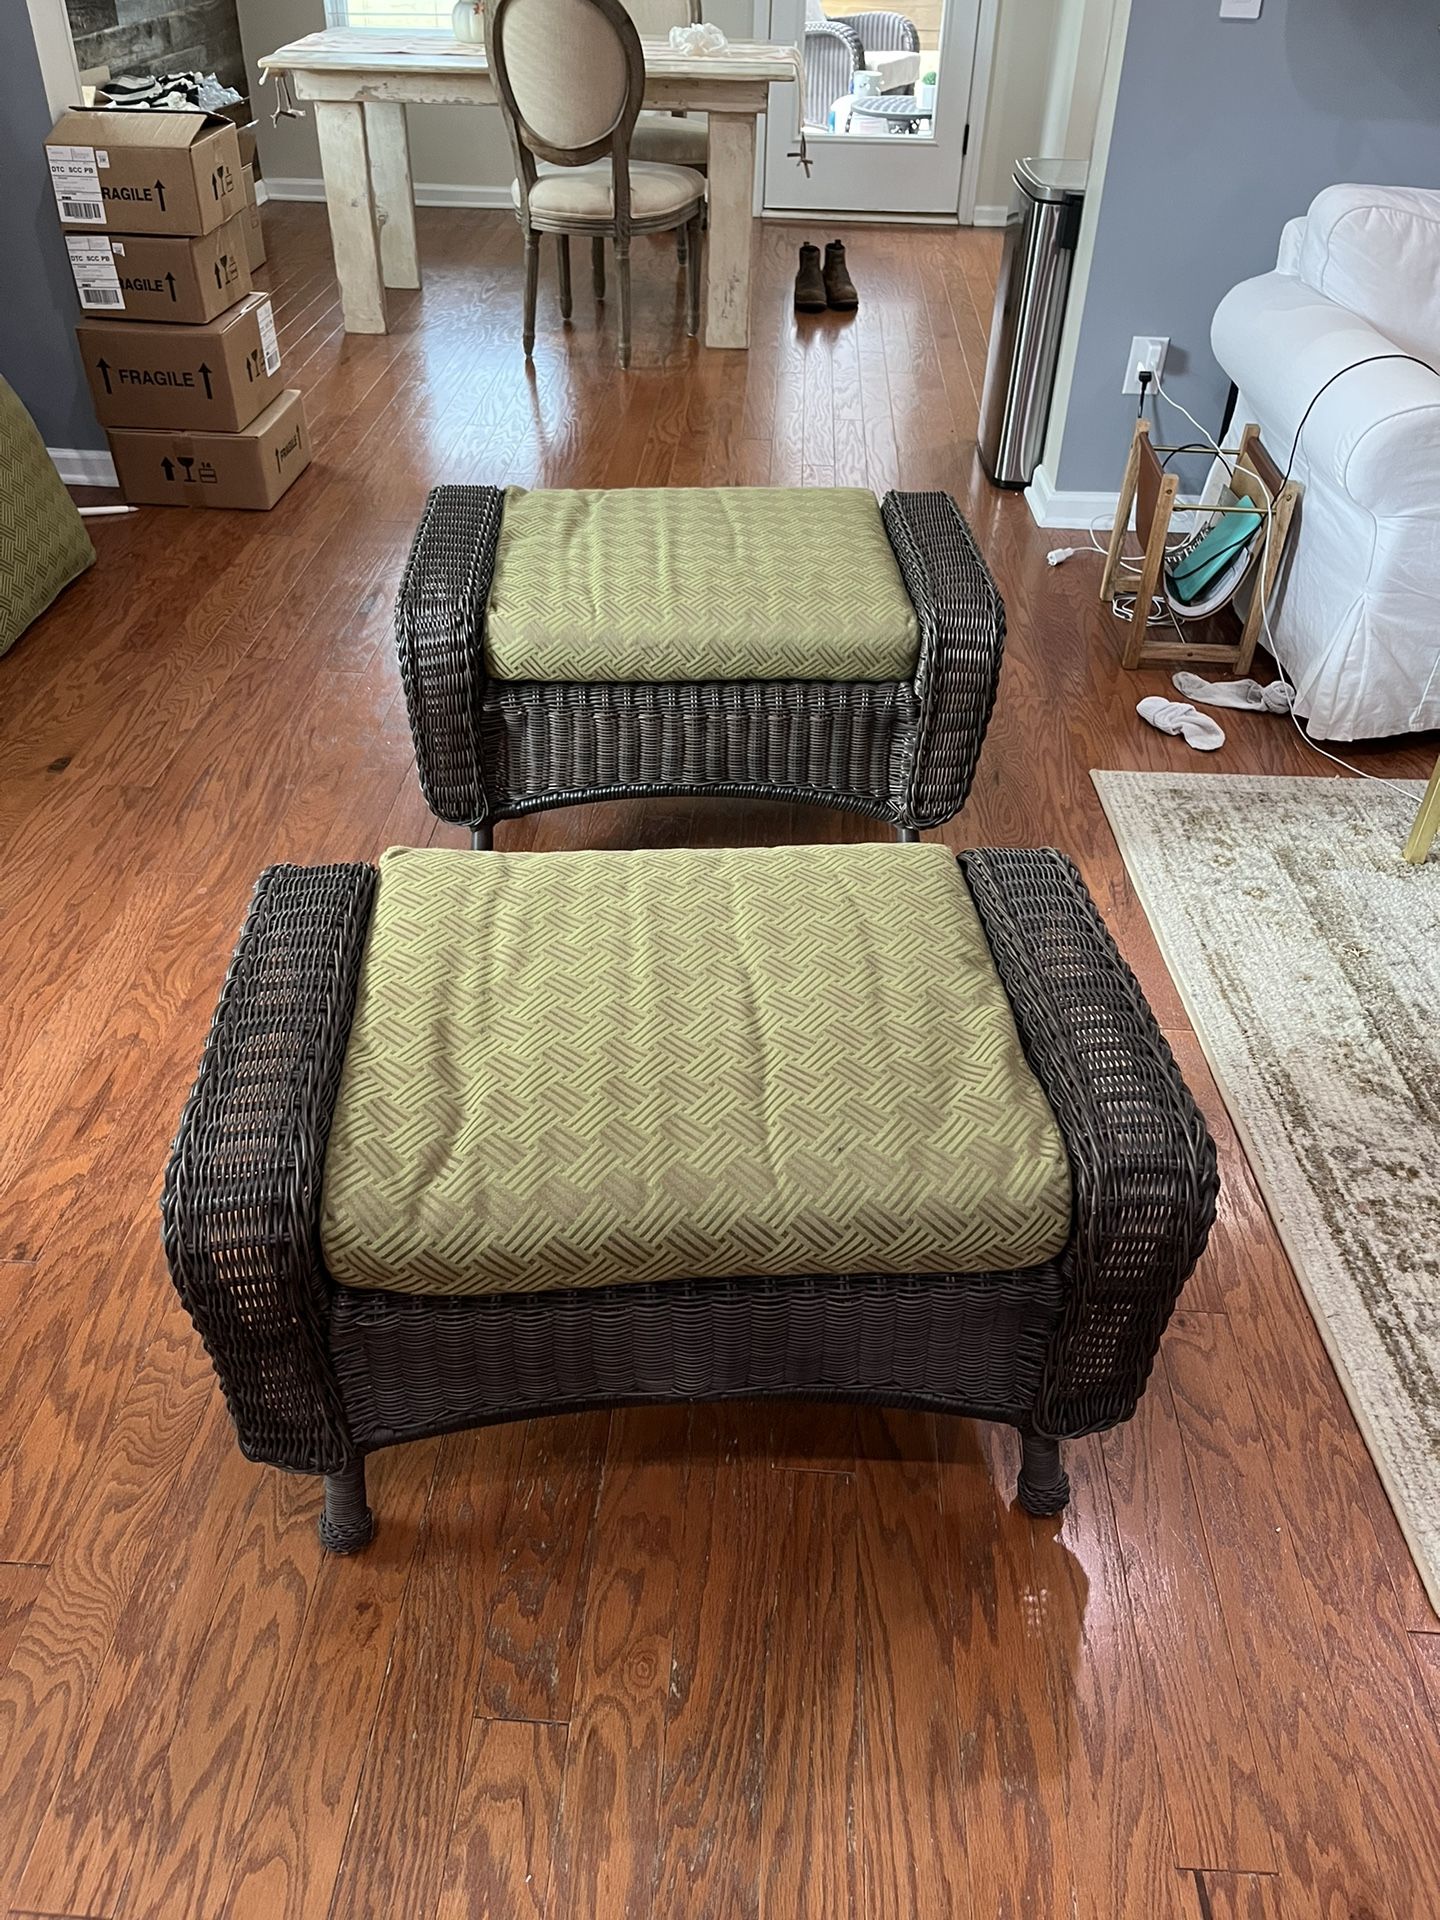 Patio Furniture Cushions 